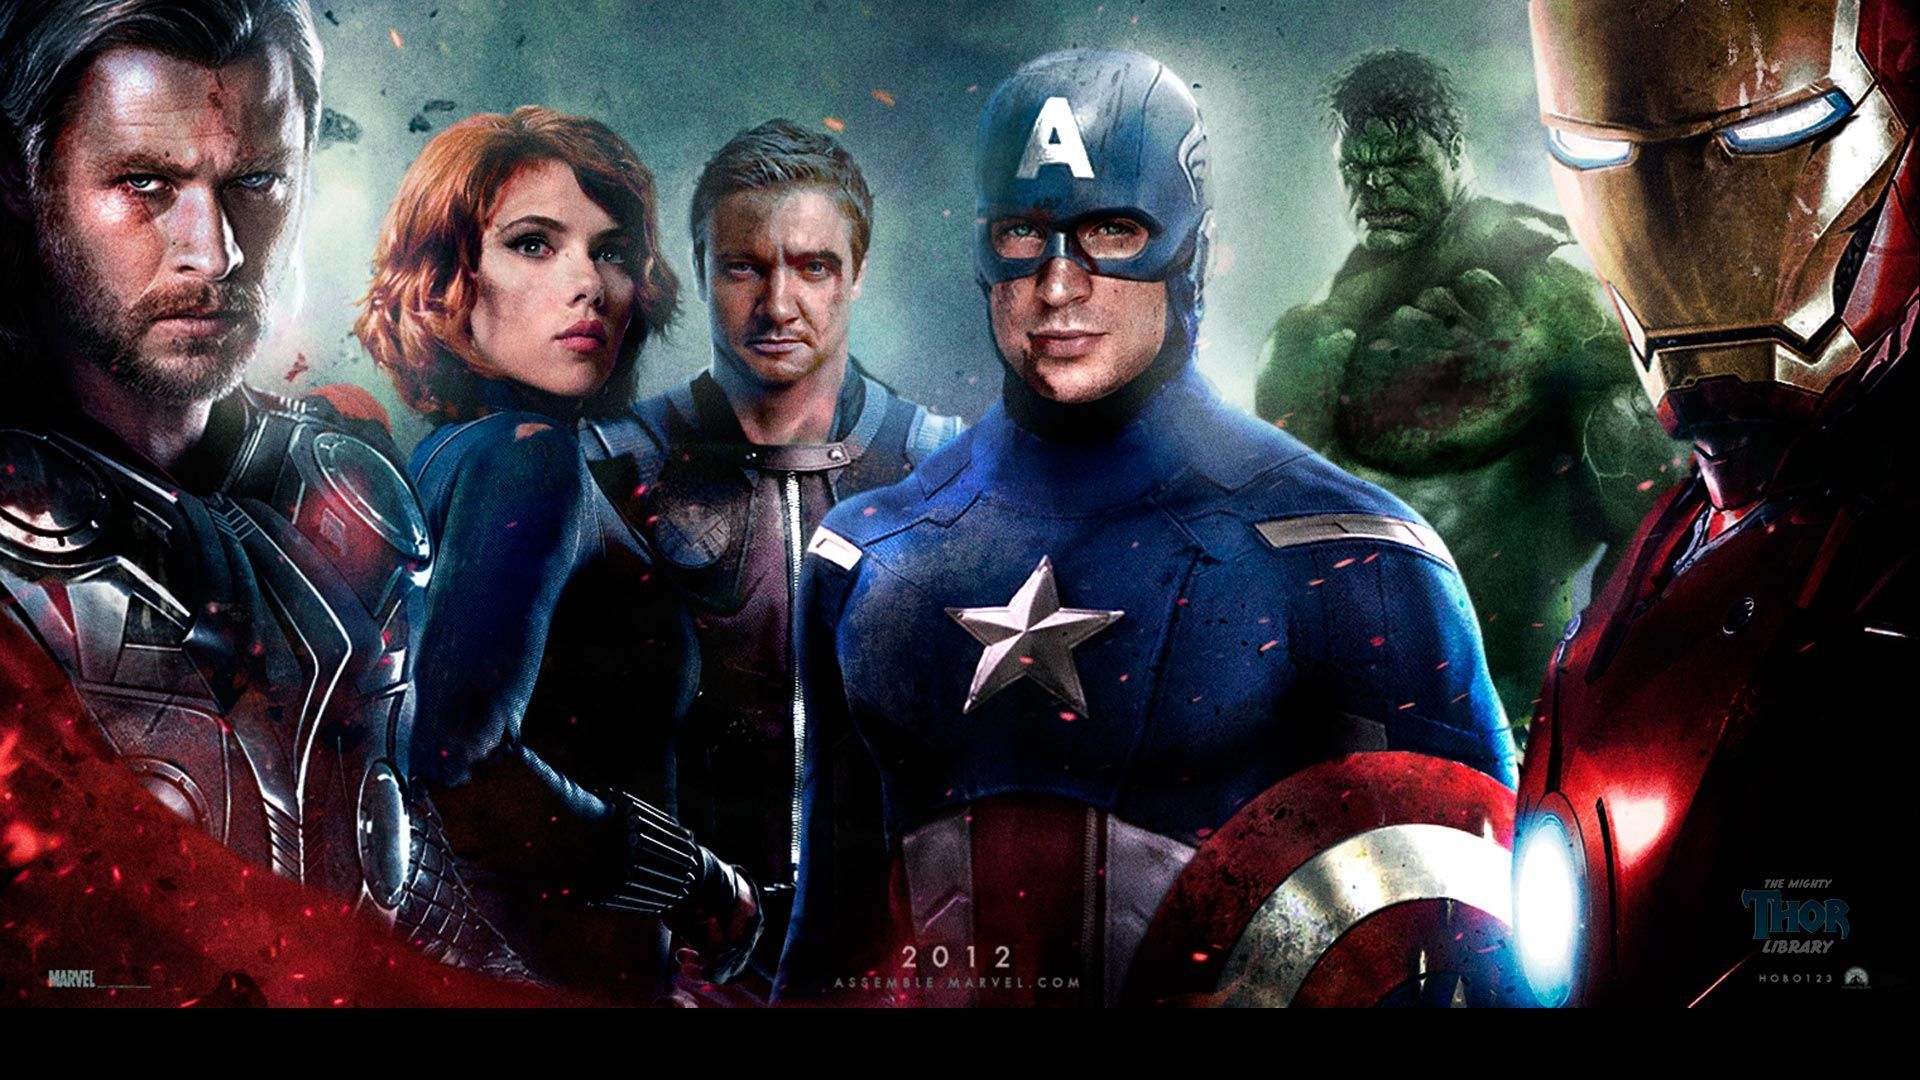 Heroes HD Wallpaper